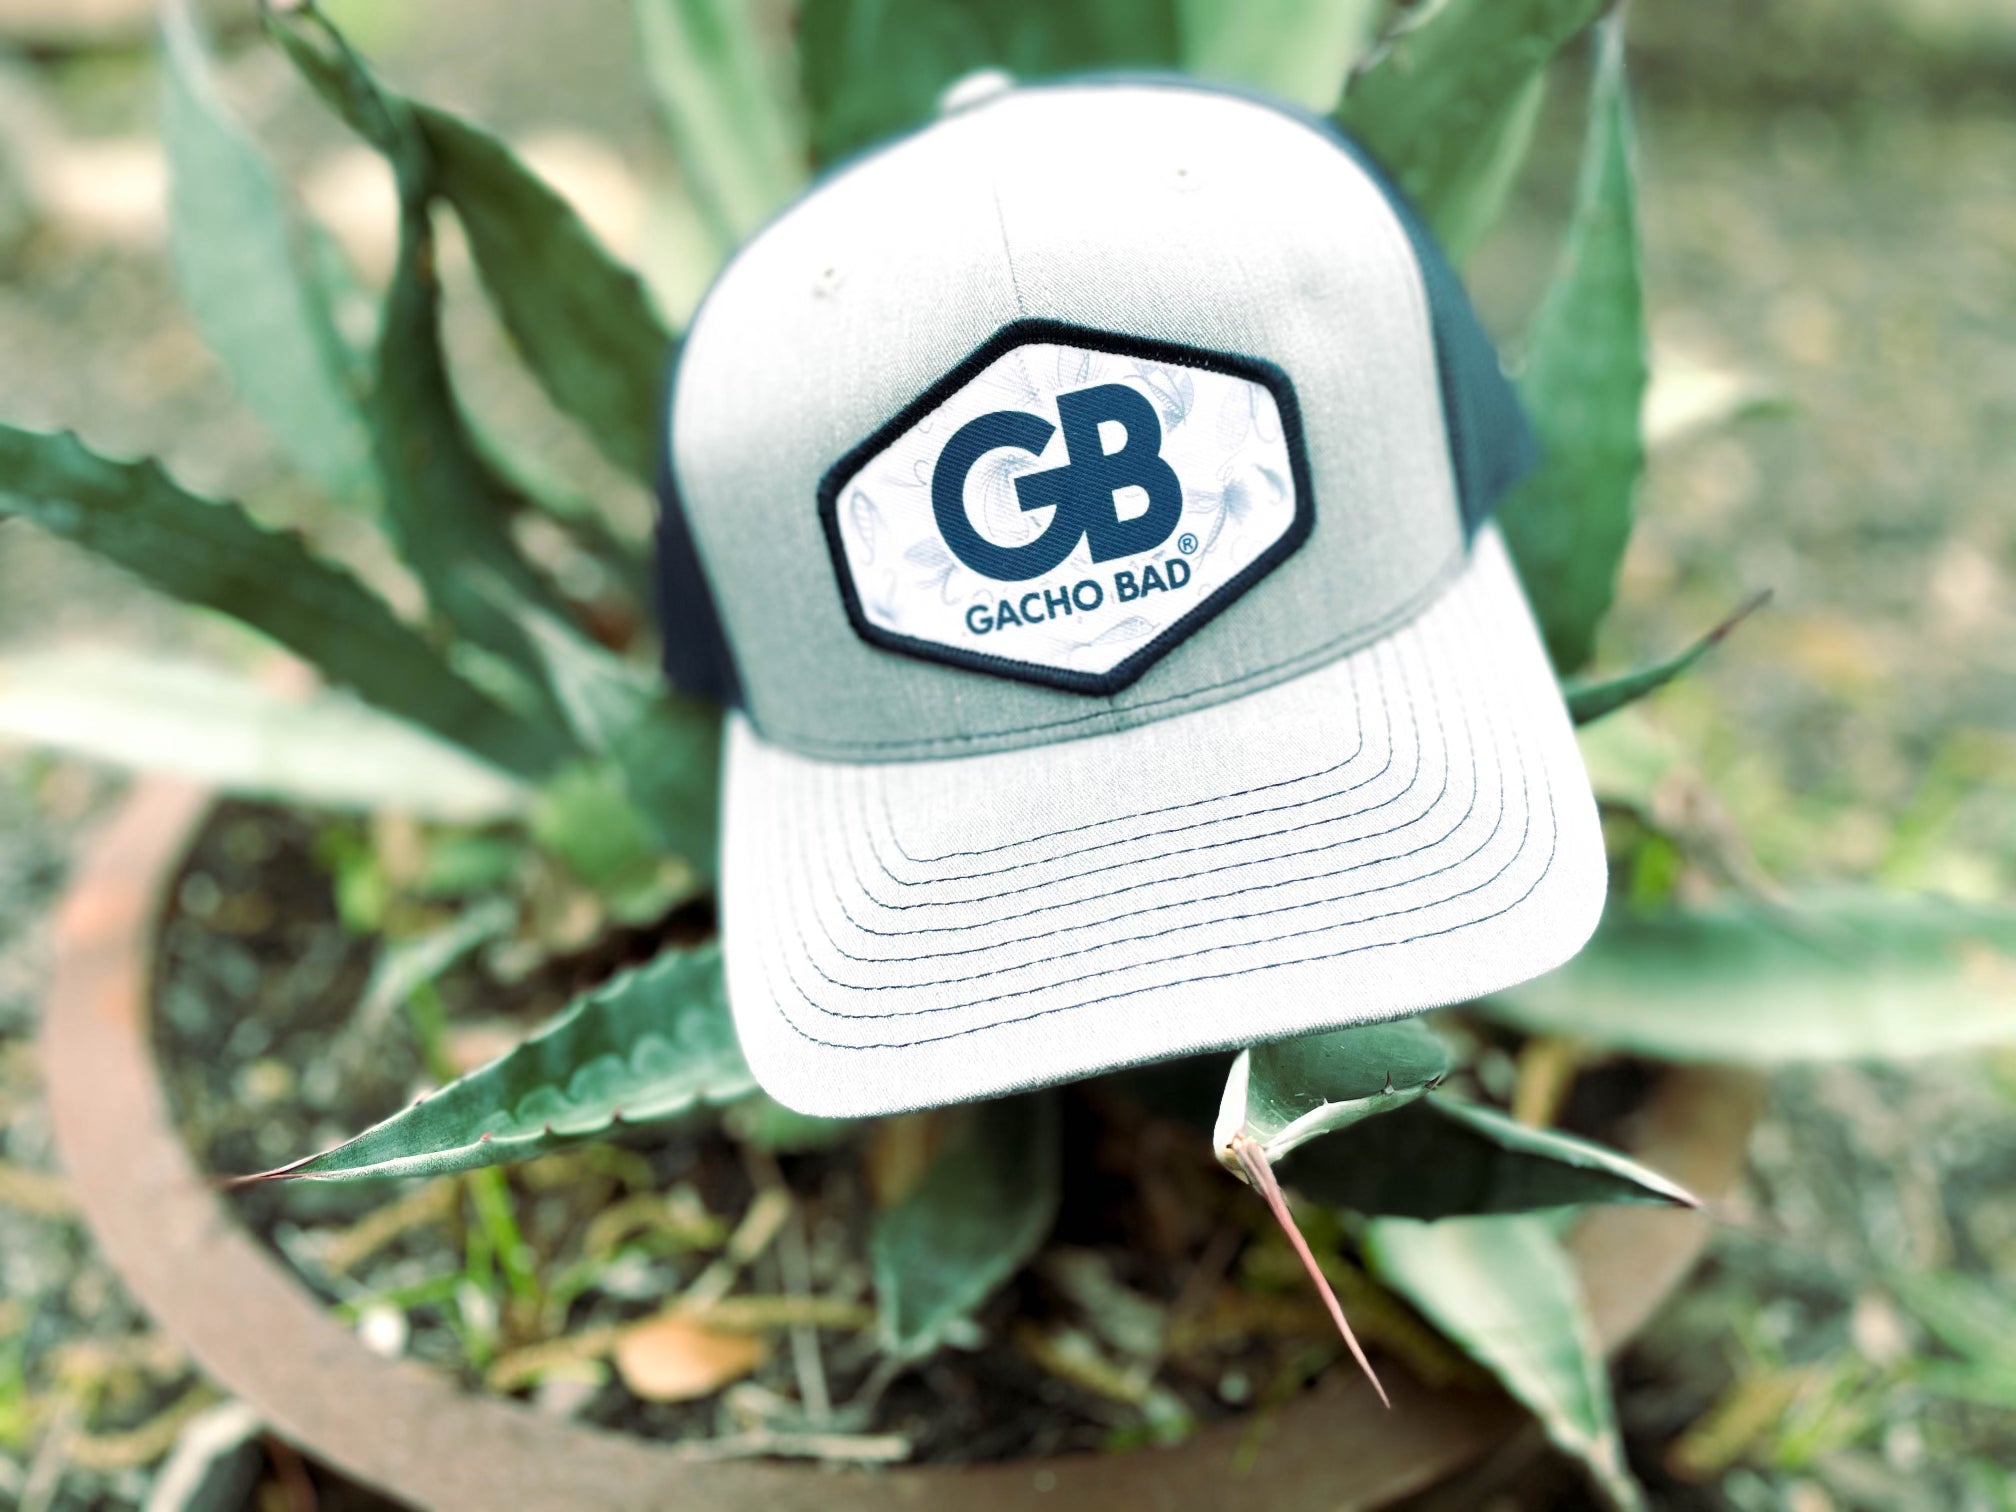 Gacho bad fishing lure hat – The Gruene G.O.A.T